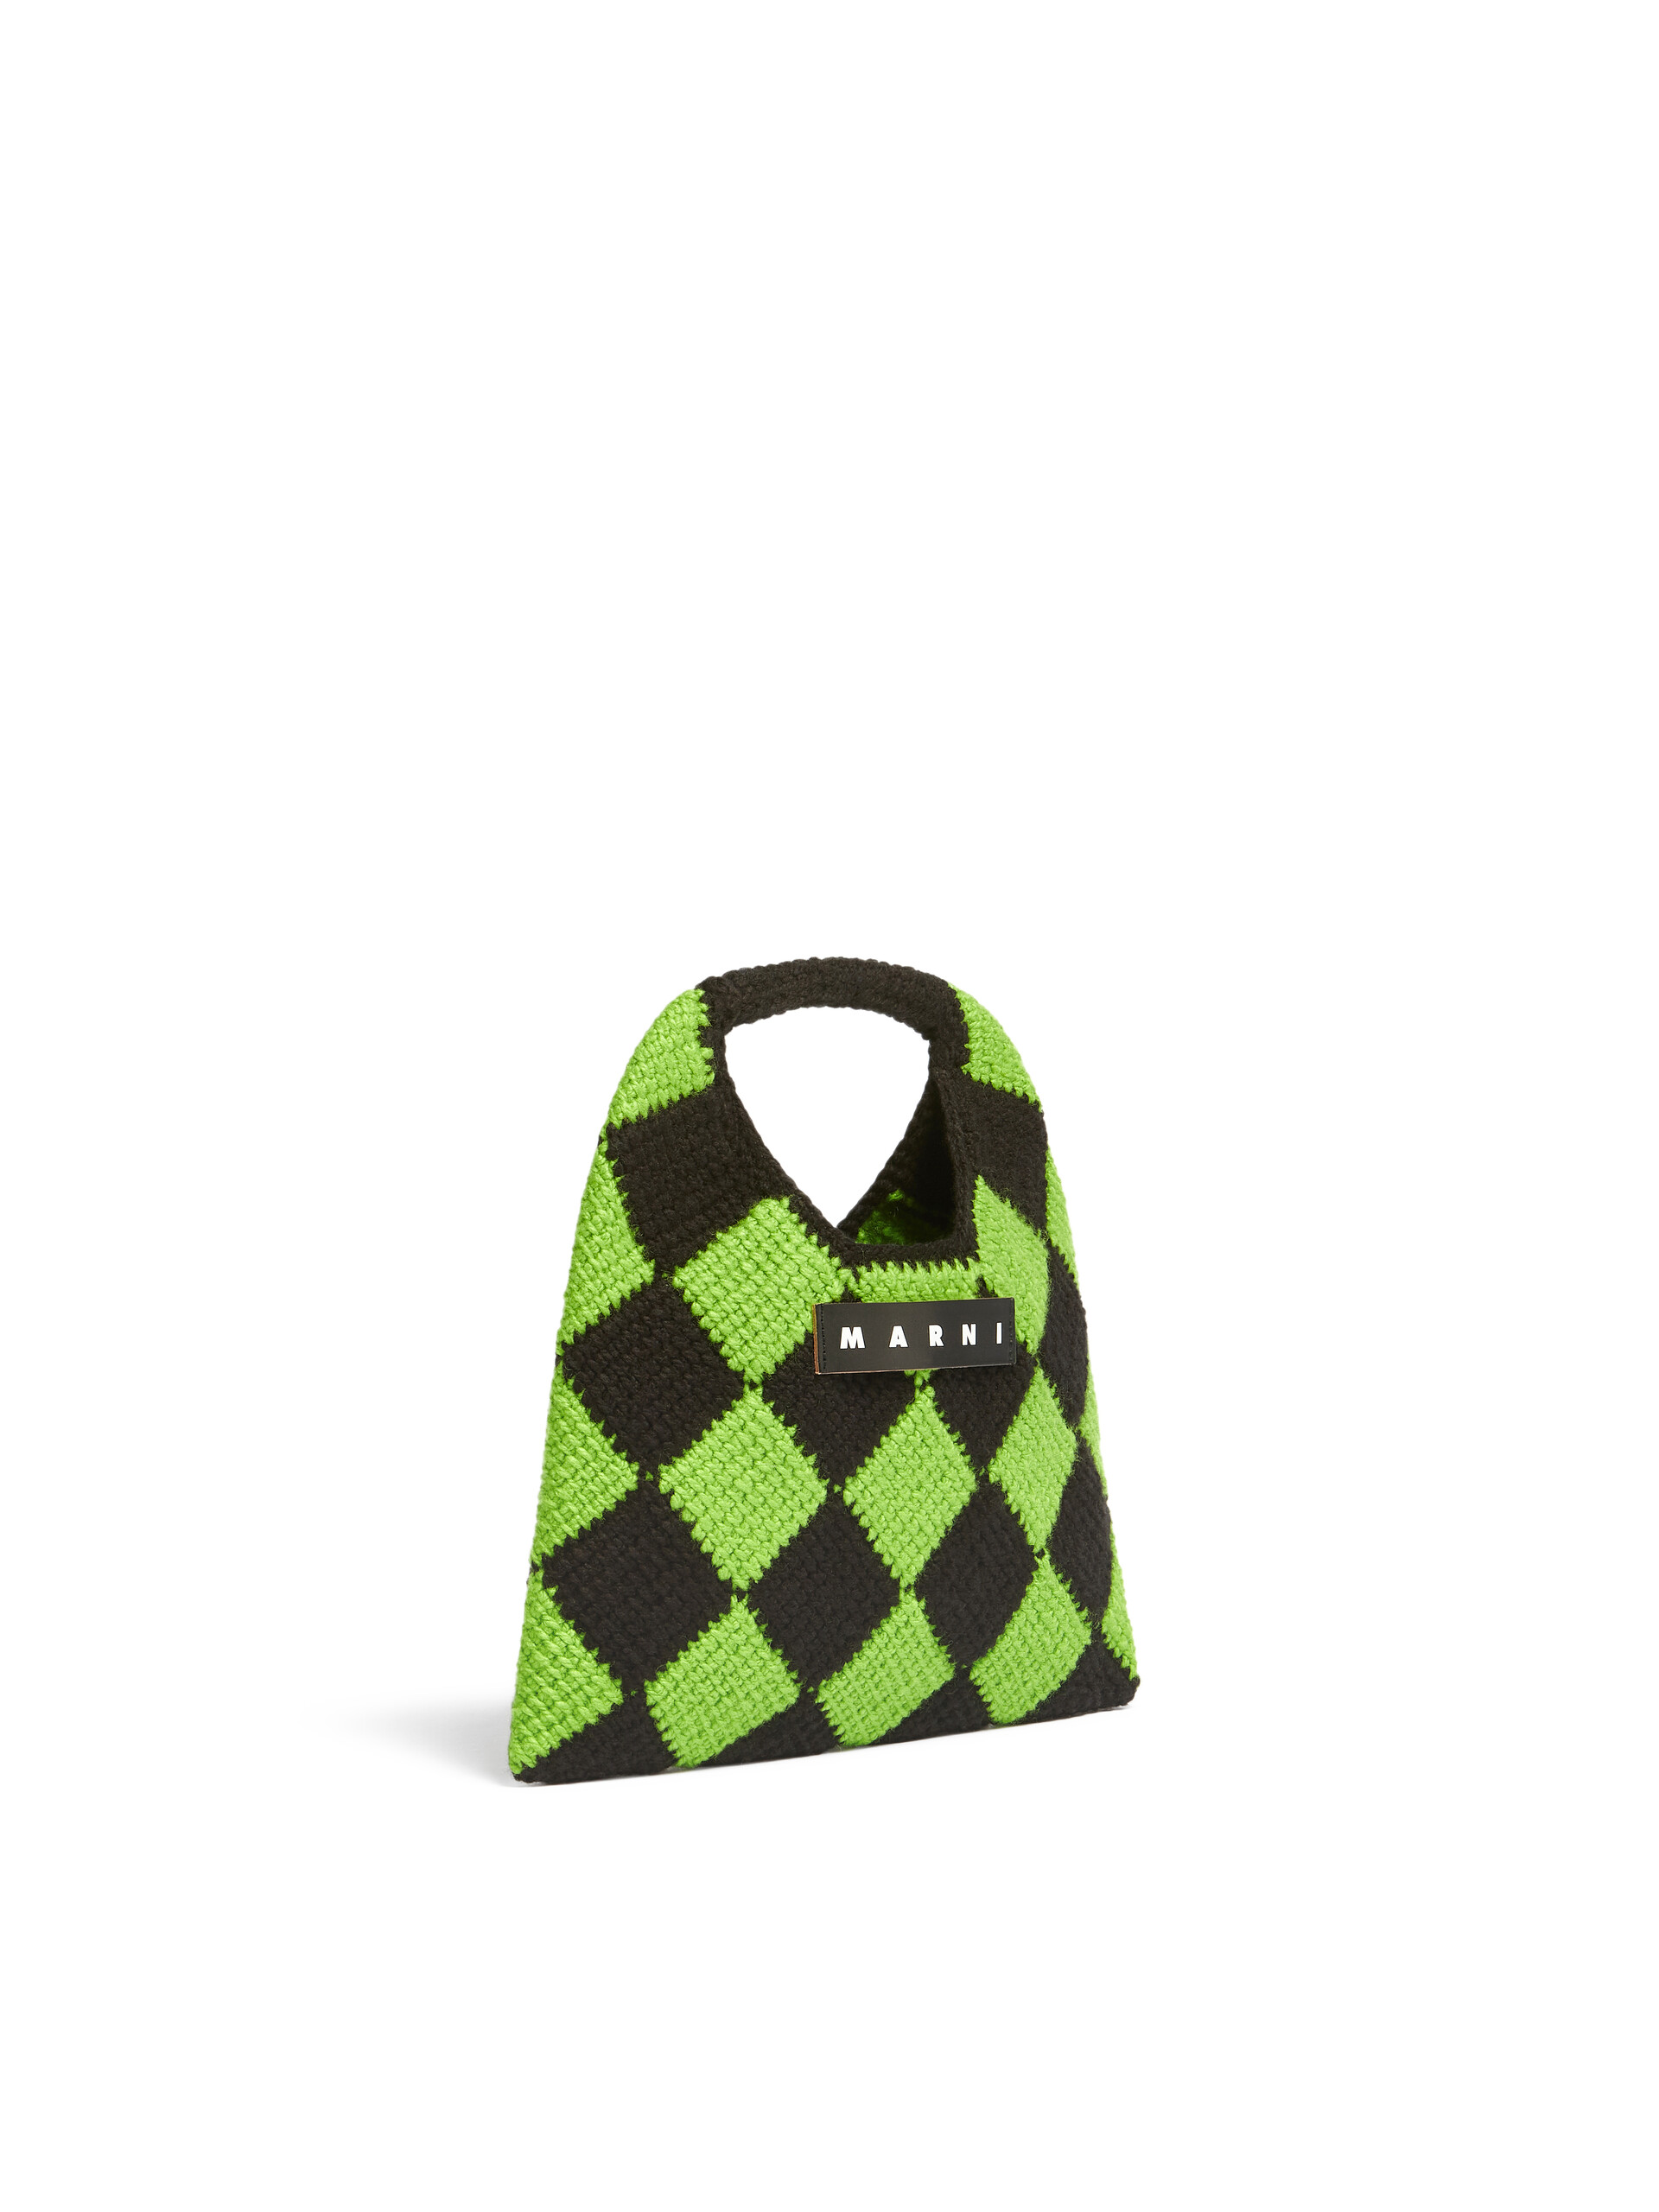 MARNI MARKET DIAMOND small bag in green and black tech wool - Bags - Image 2